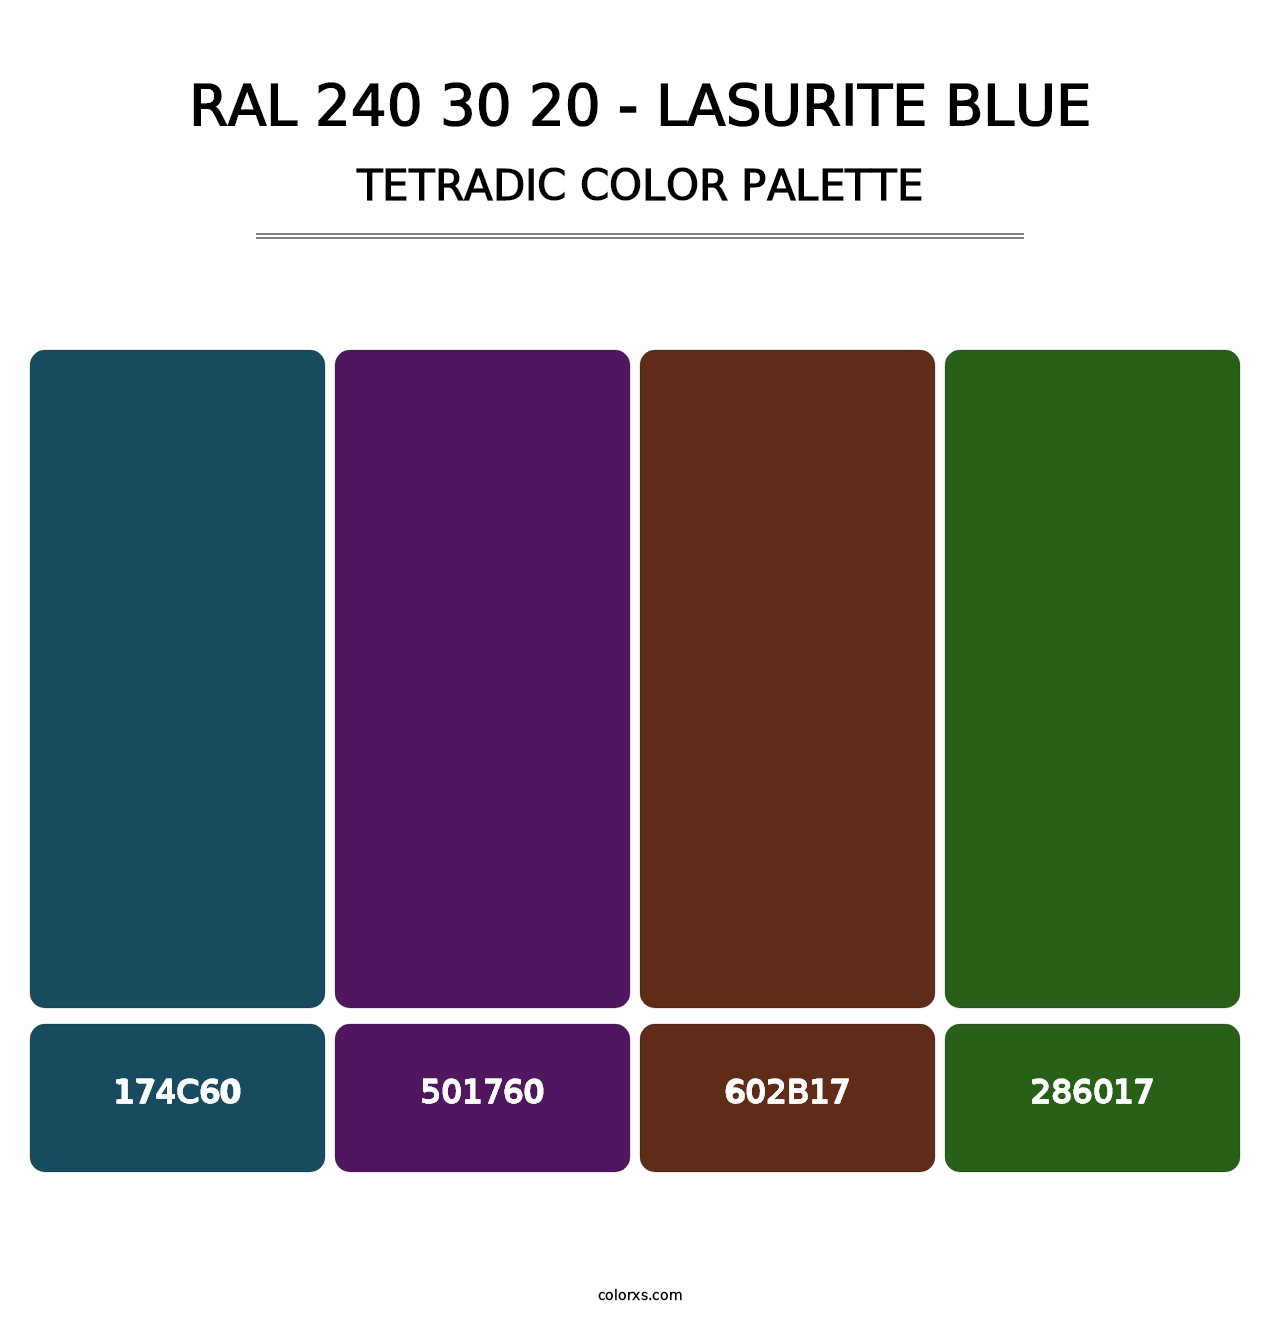 RAL 240 30 20 - Lasurite Blue - Tetradic Color Palette